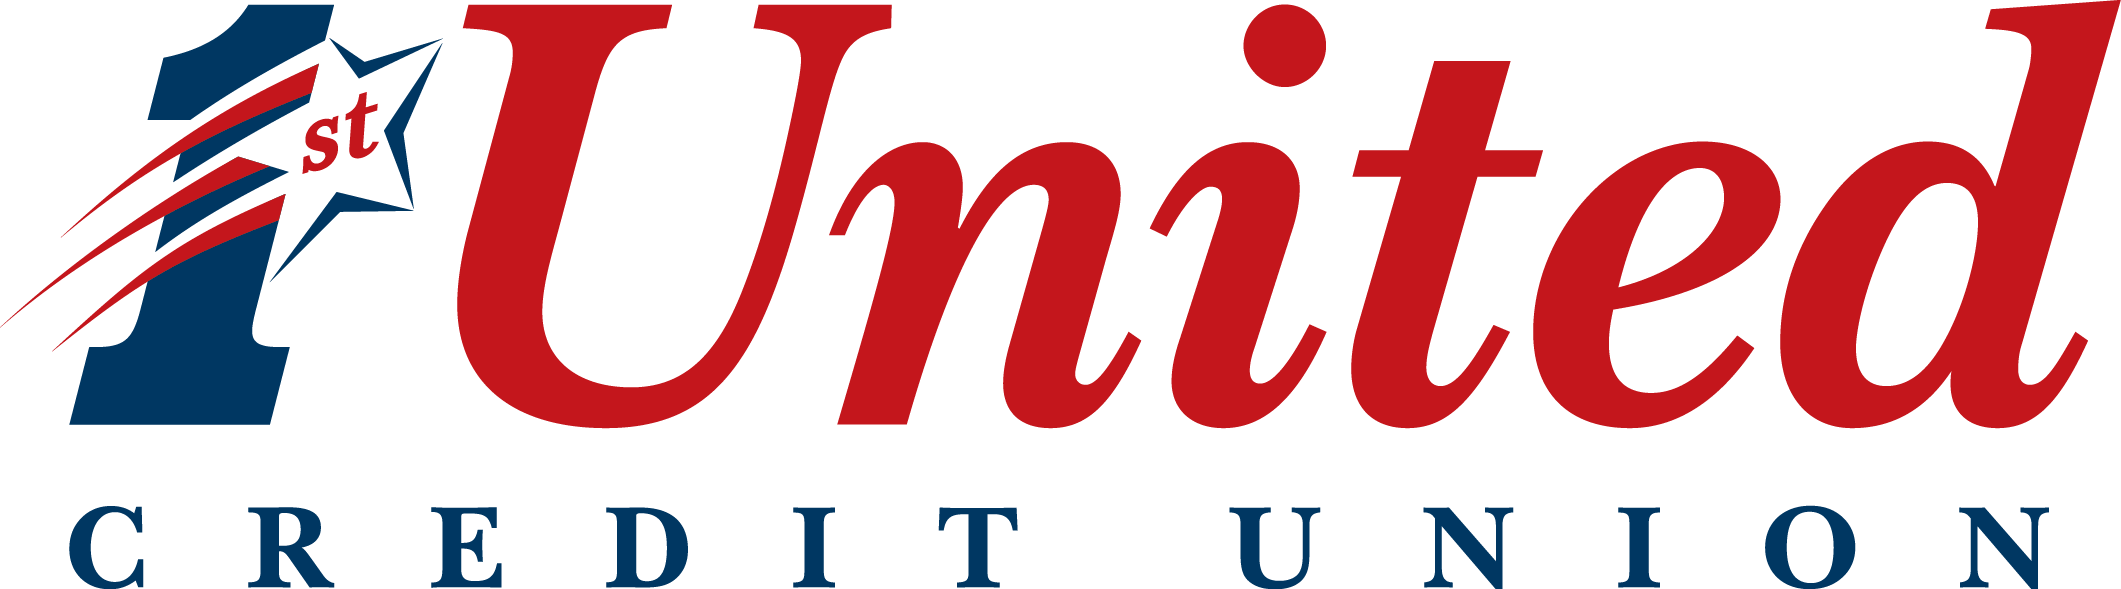 First United Credit Union logo